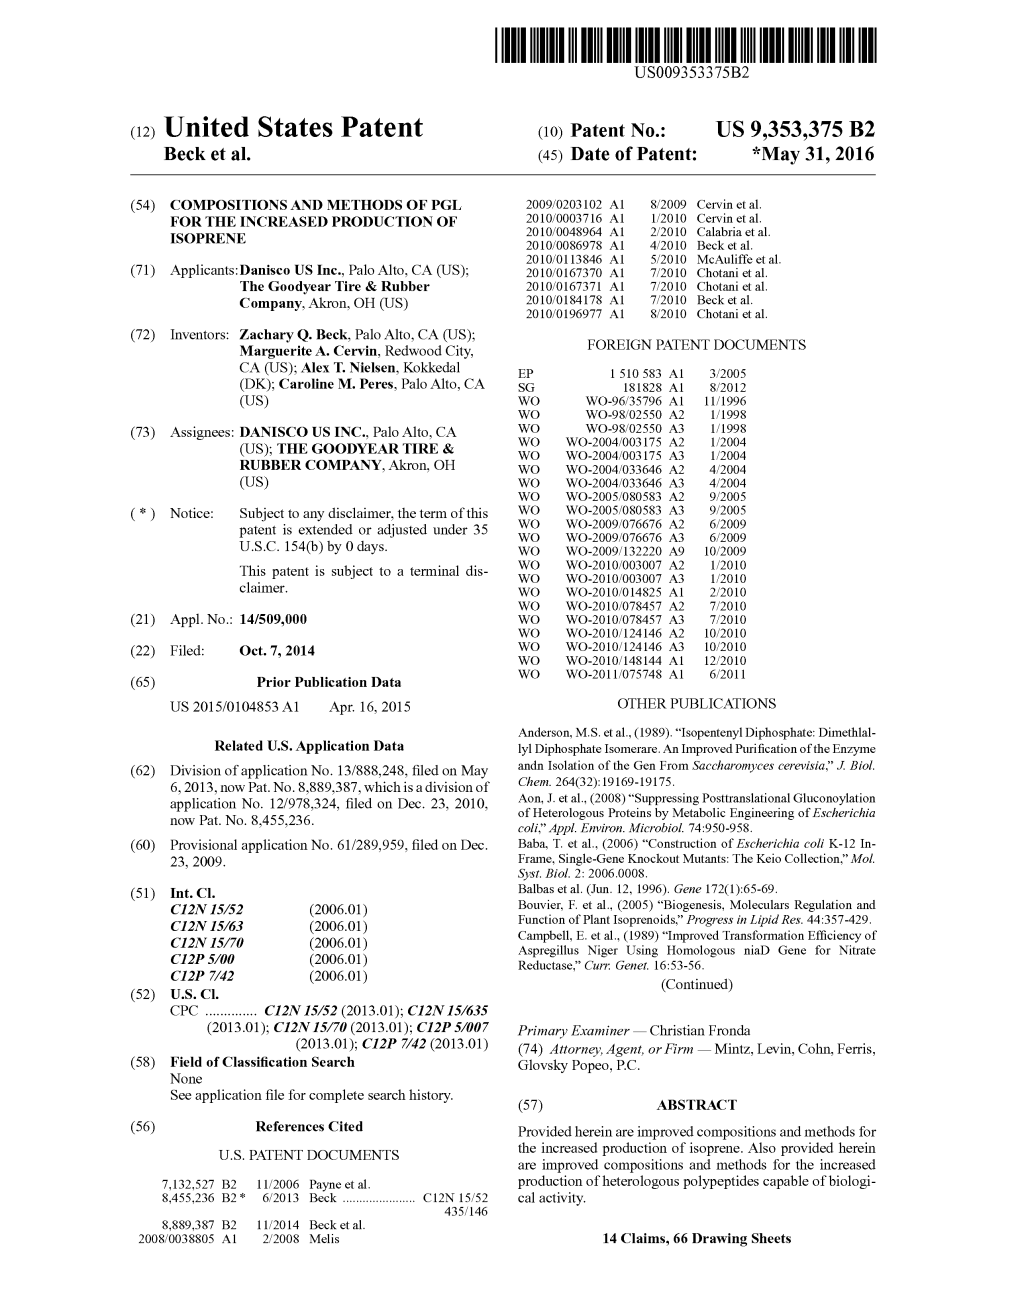 (12) United States Patent (10) Patent No.: US 9,353,375 B2 Beck Et Al